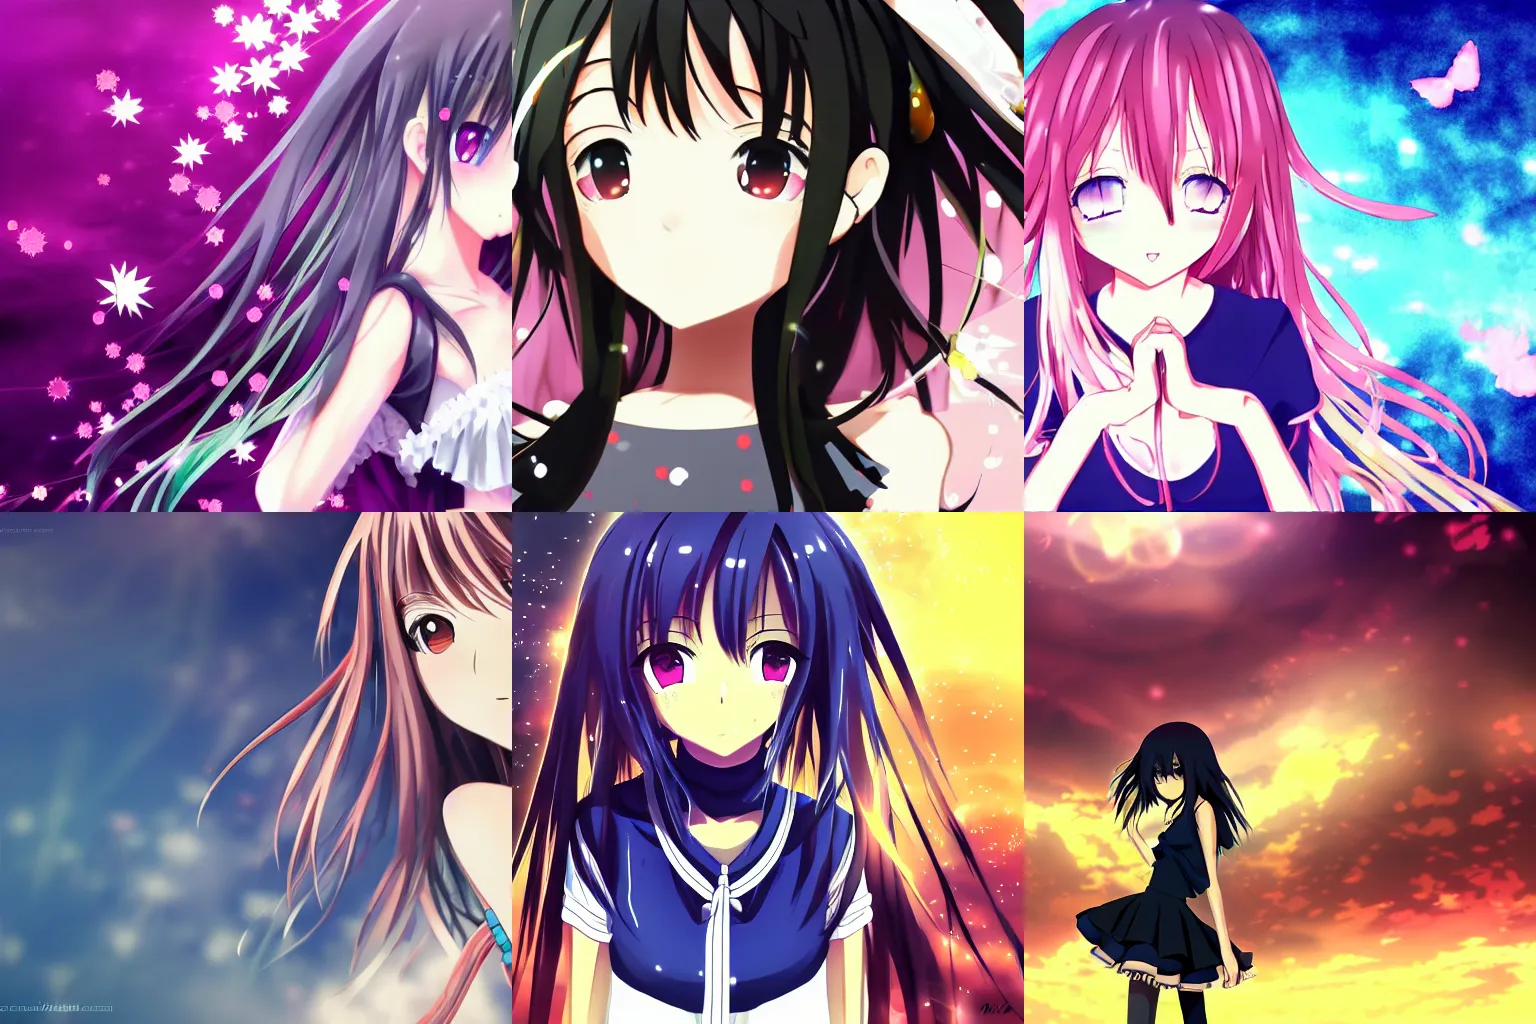 Prompt: anime girl desktop background, otaku, visual key frame, high contrast